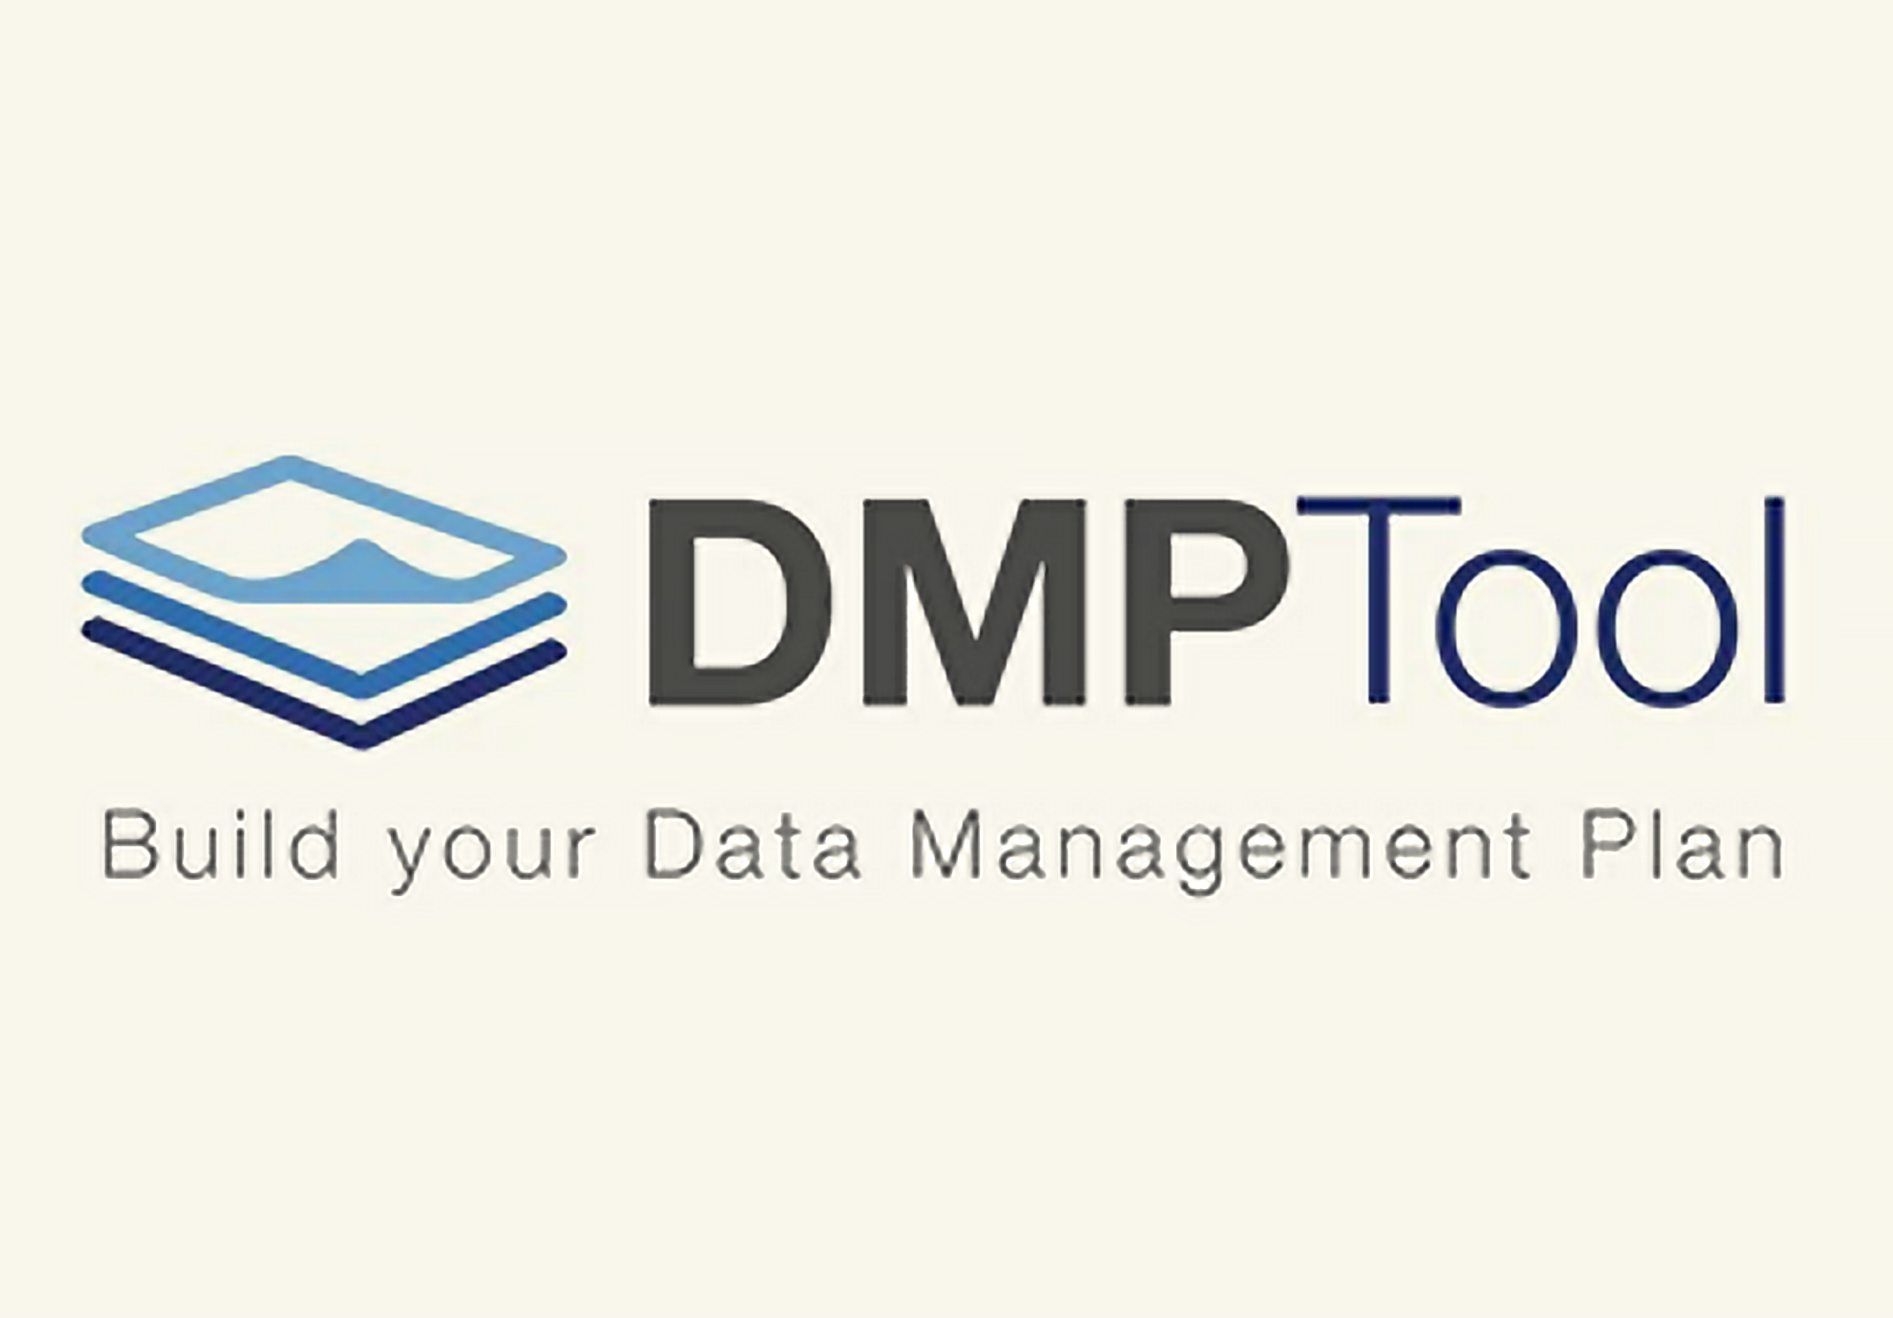 DMPTool - Build your Data Management Plan